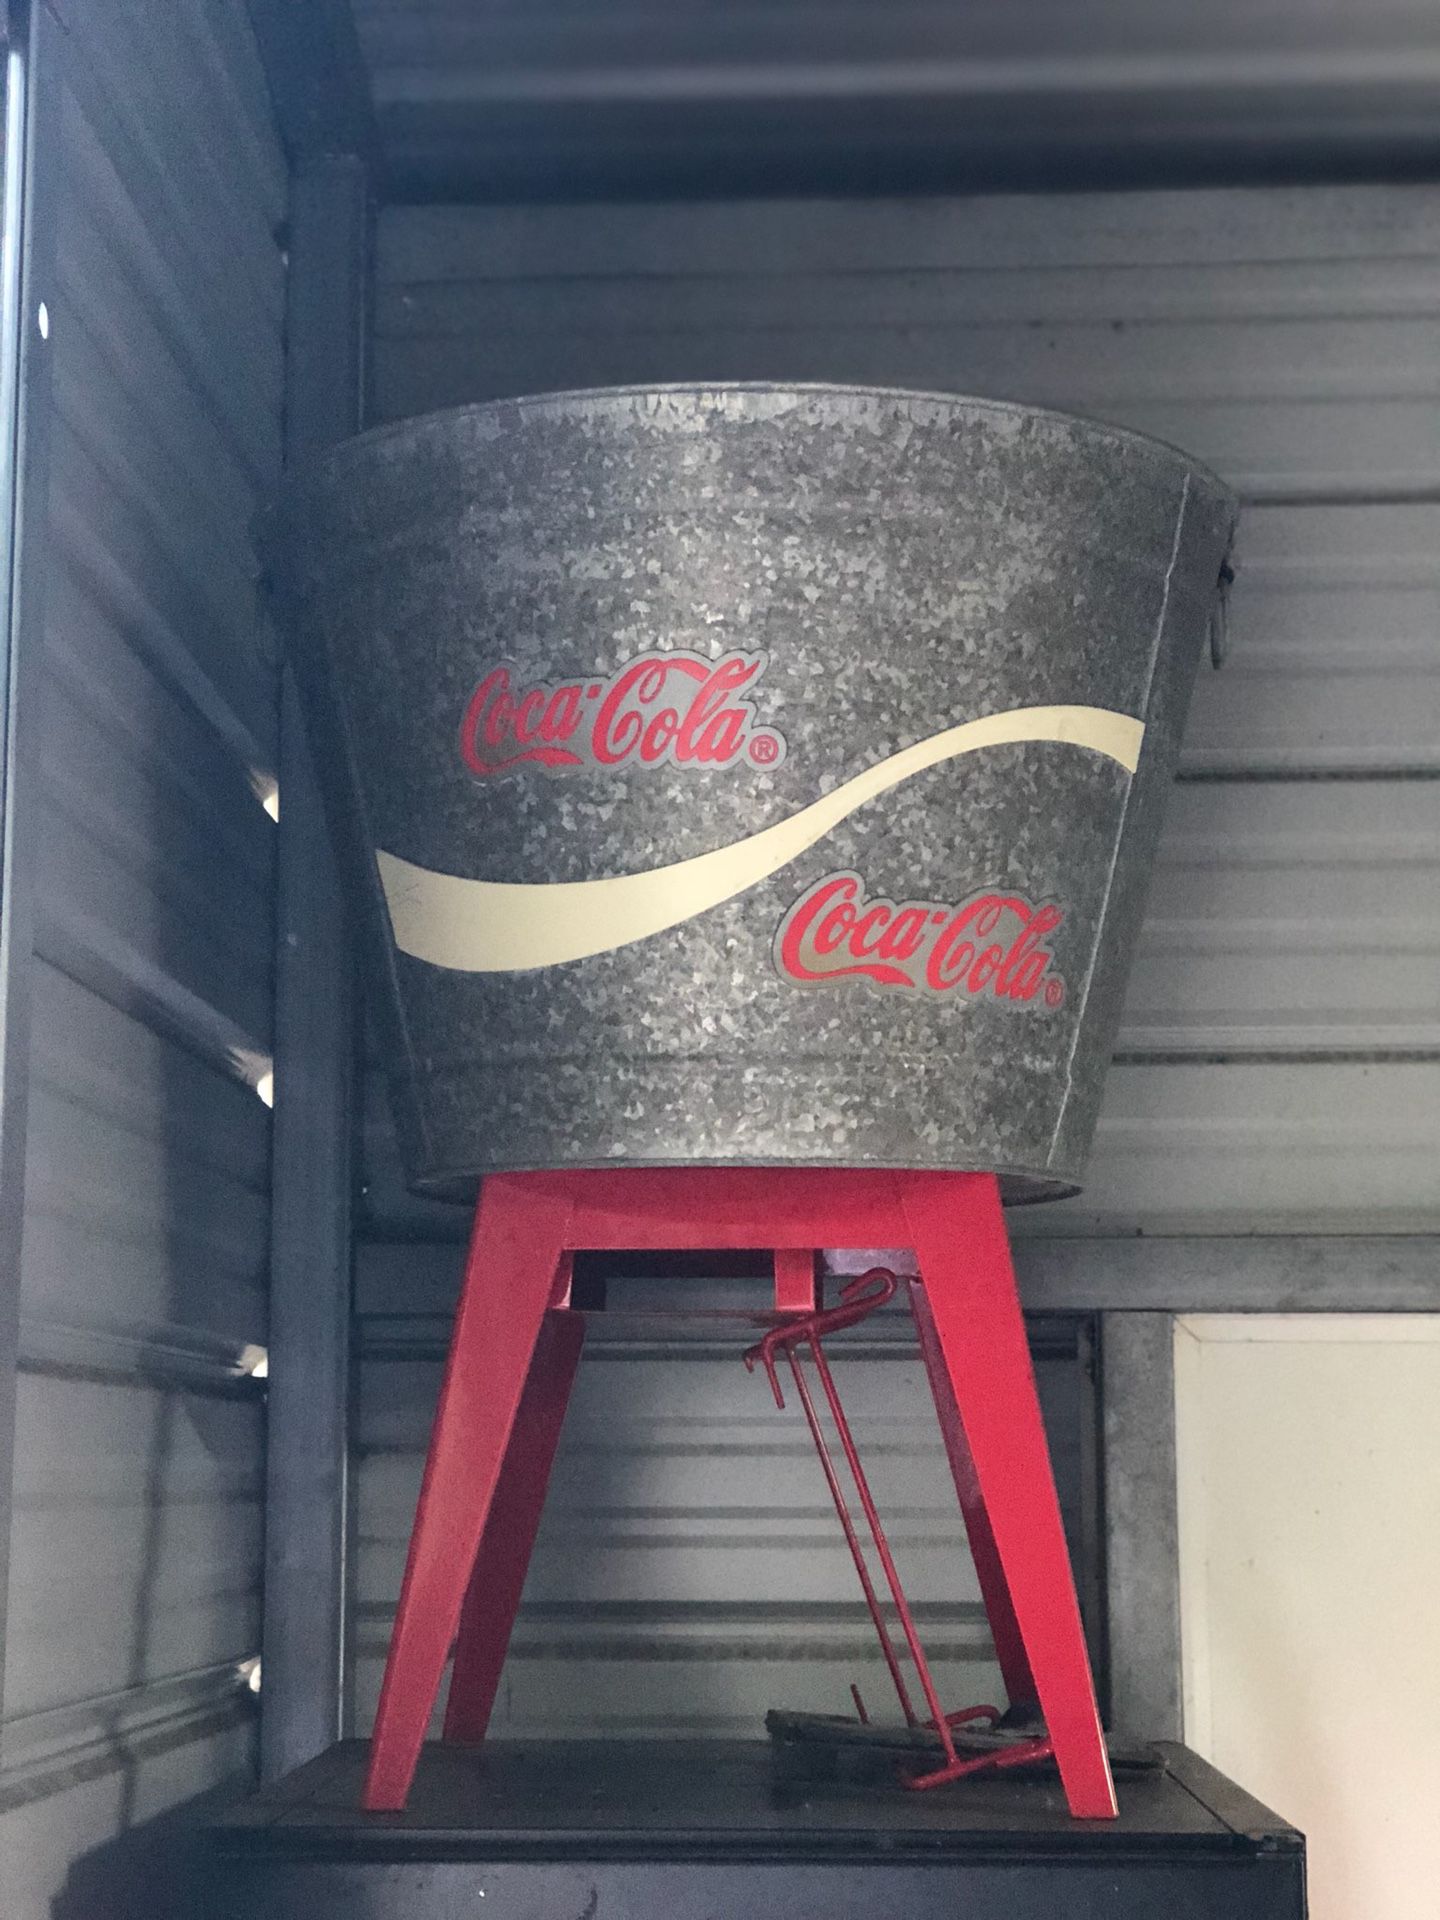 Coca Cola wash tub cooler